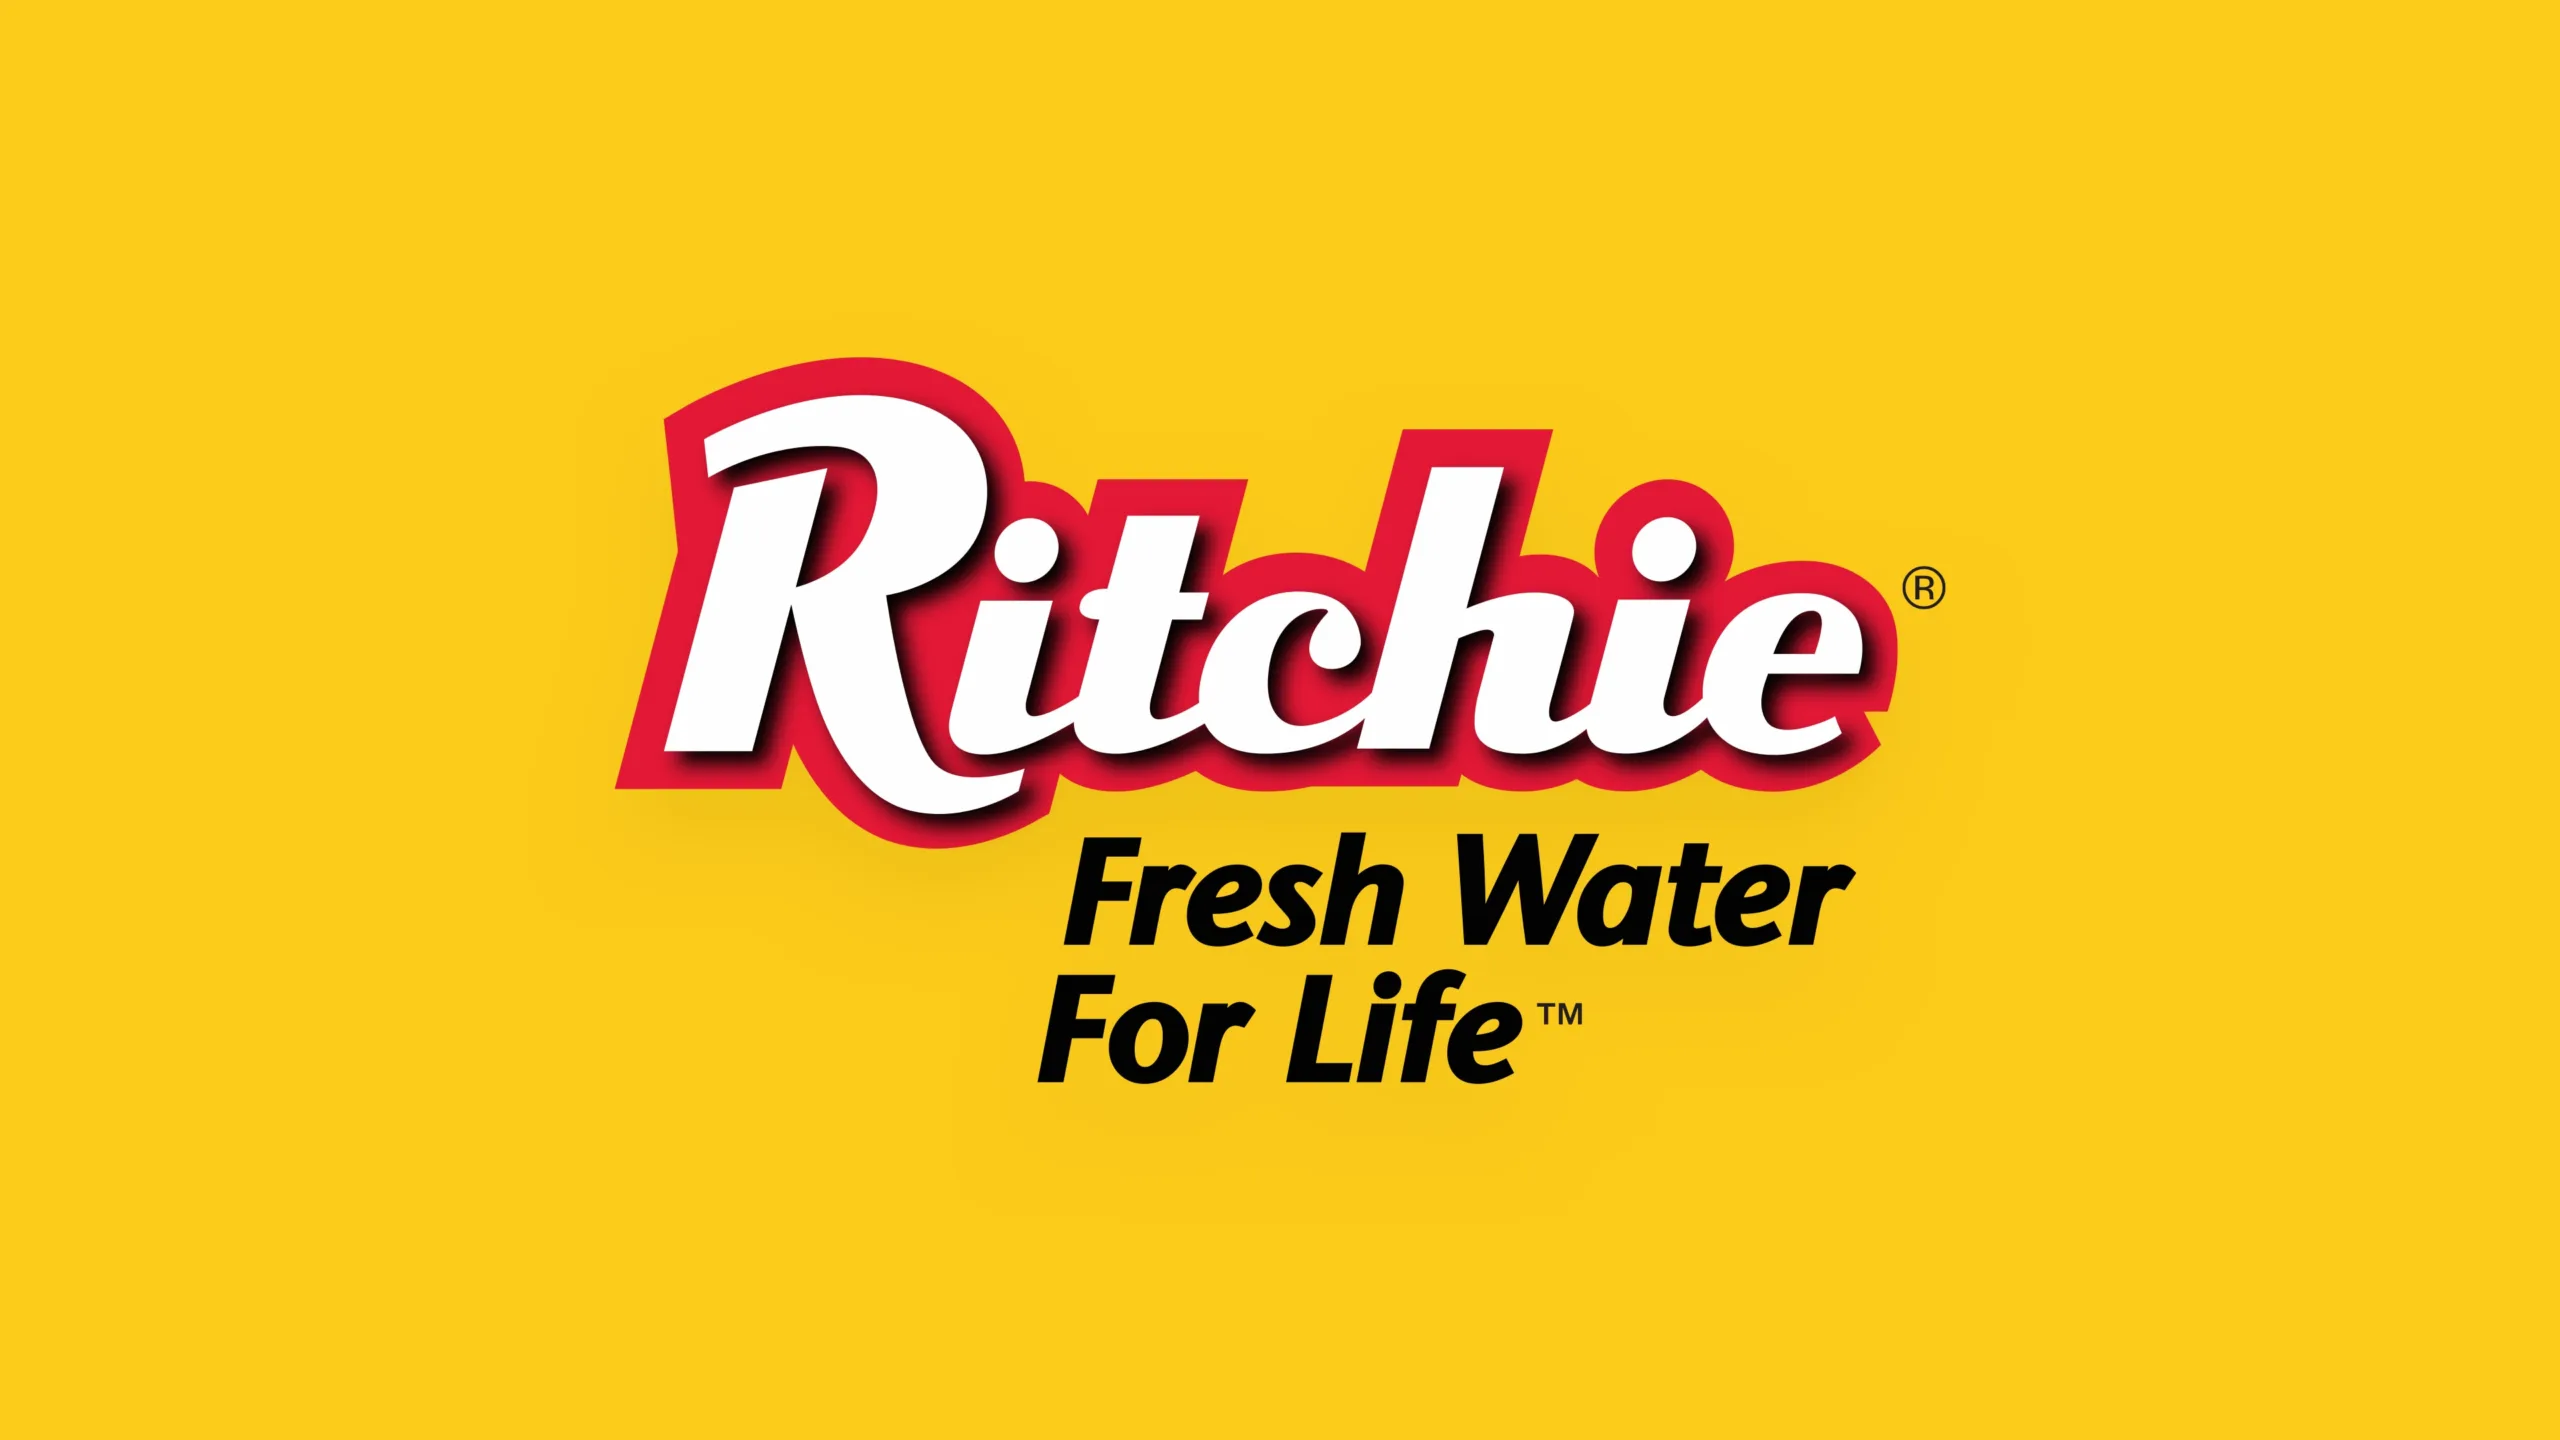 Ritchie - marketing, branding, logo design, digital advertising, web design, campaign design